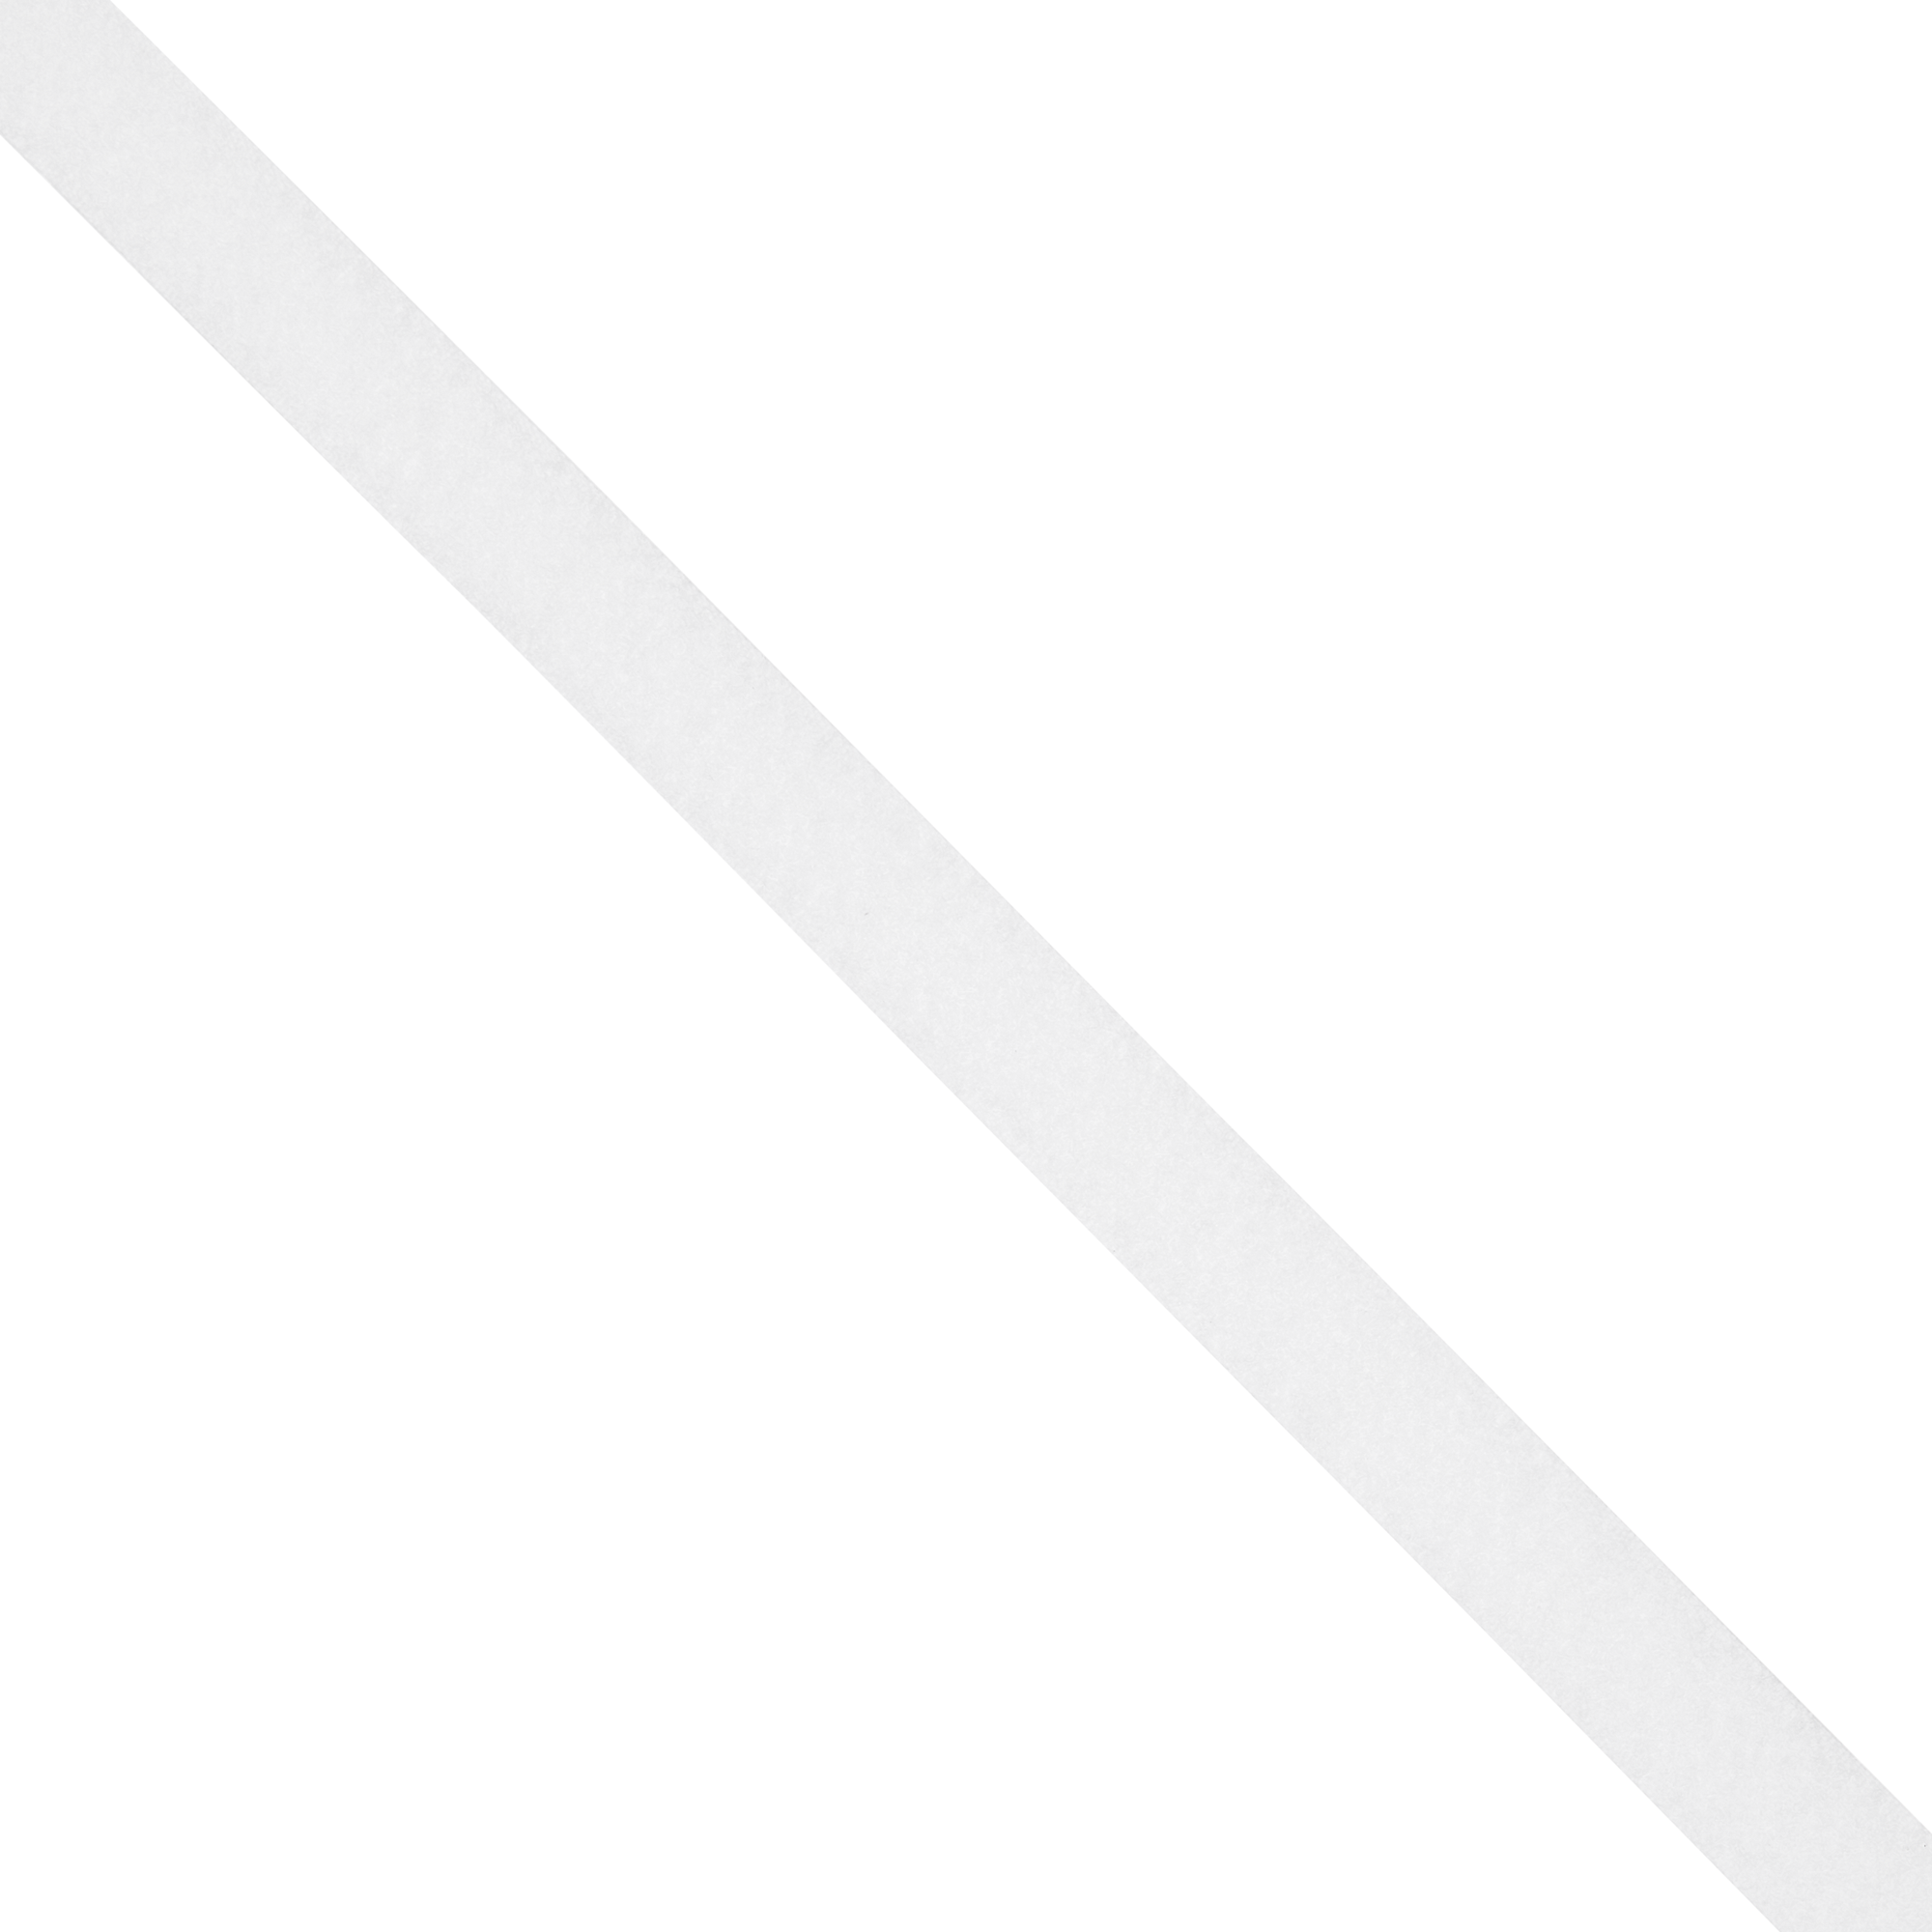 Flauschband selbstklebend weiß Meterware 20 mm + product picture